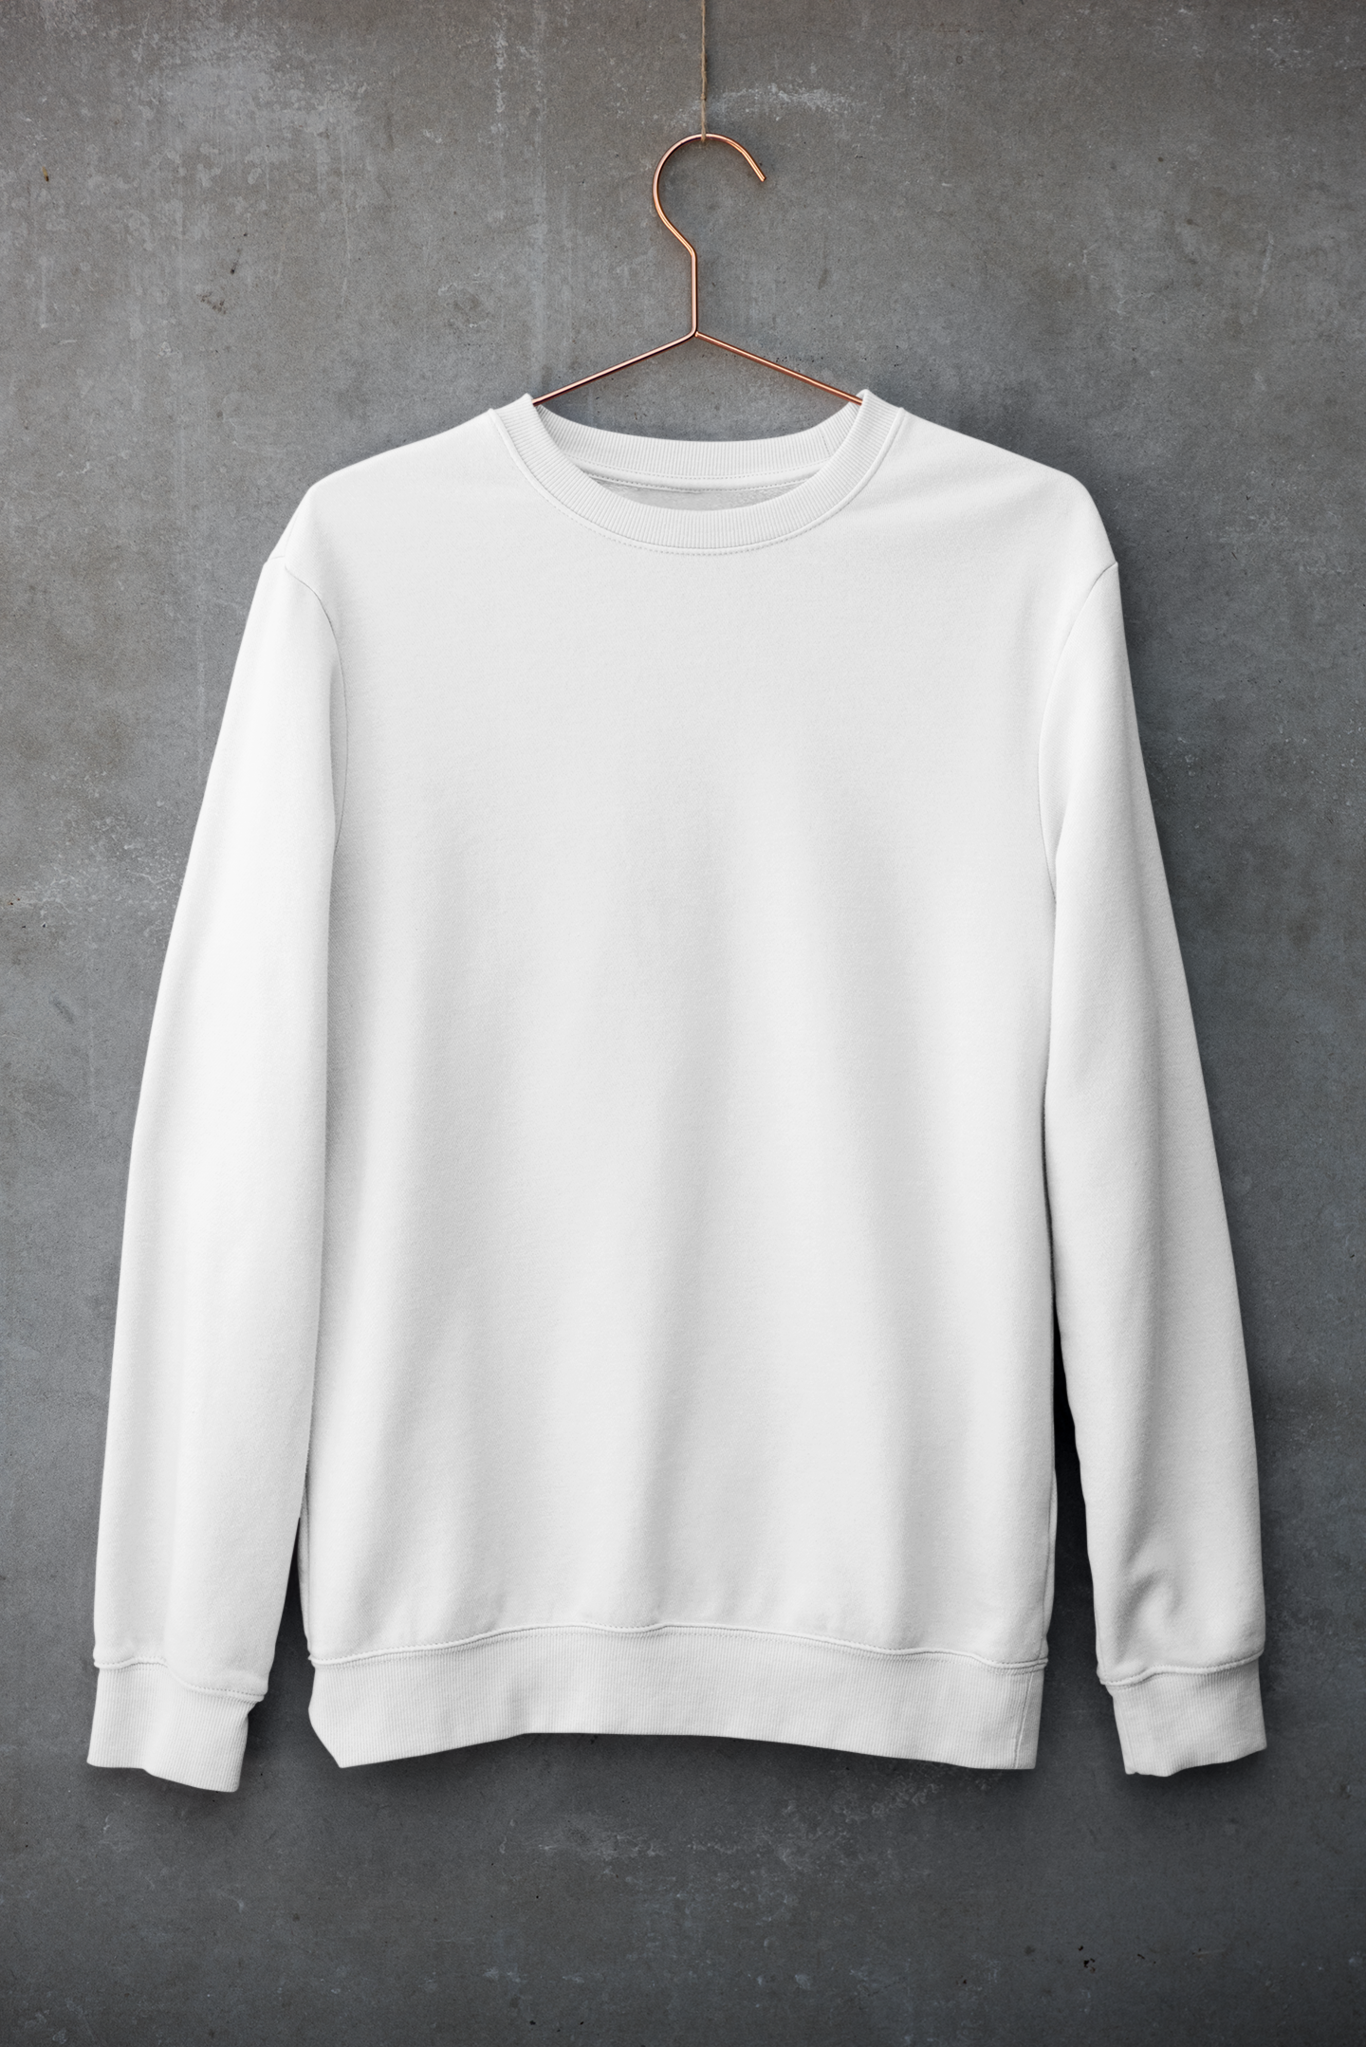 Unisex Sweatshirt: White